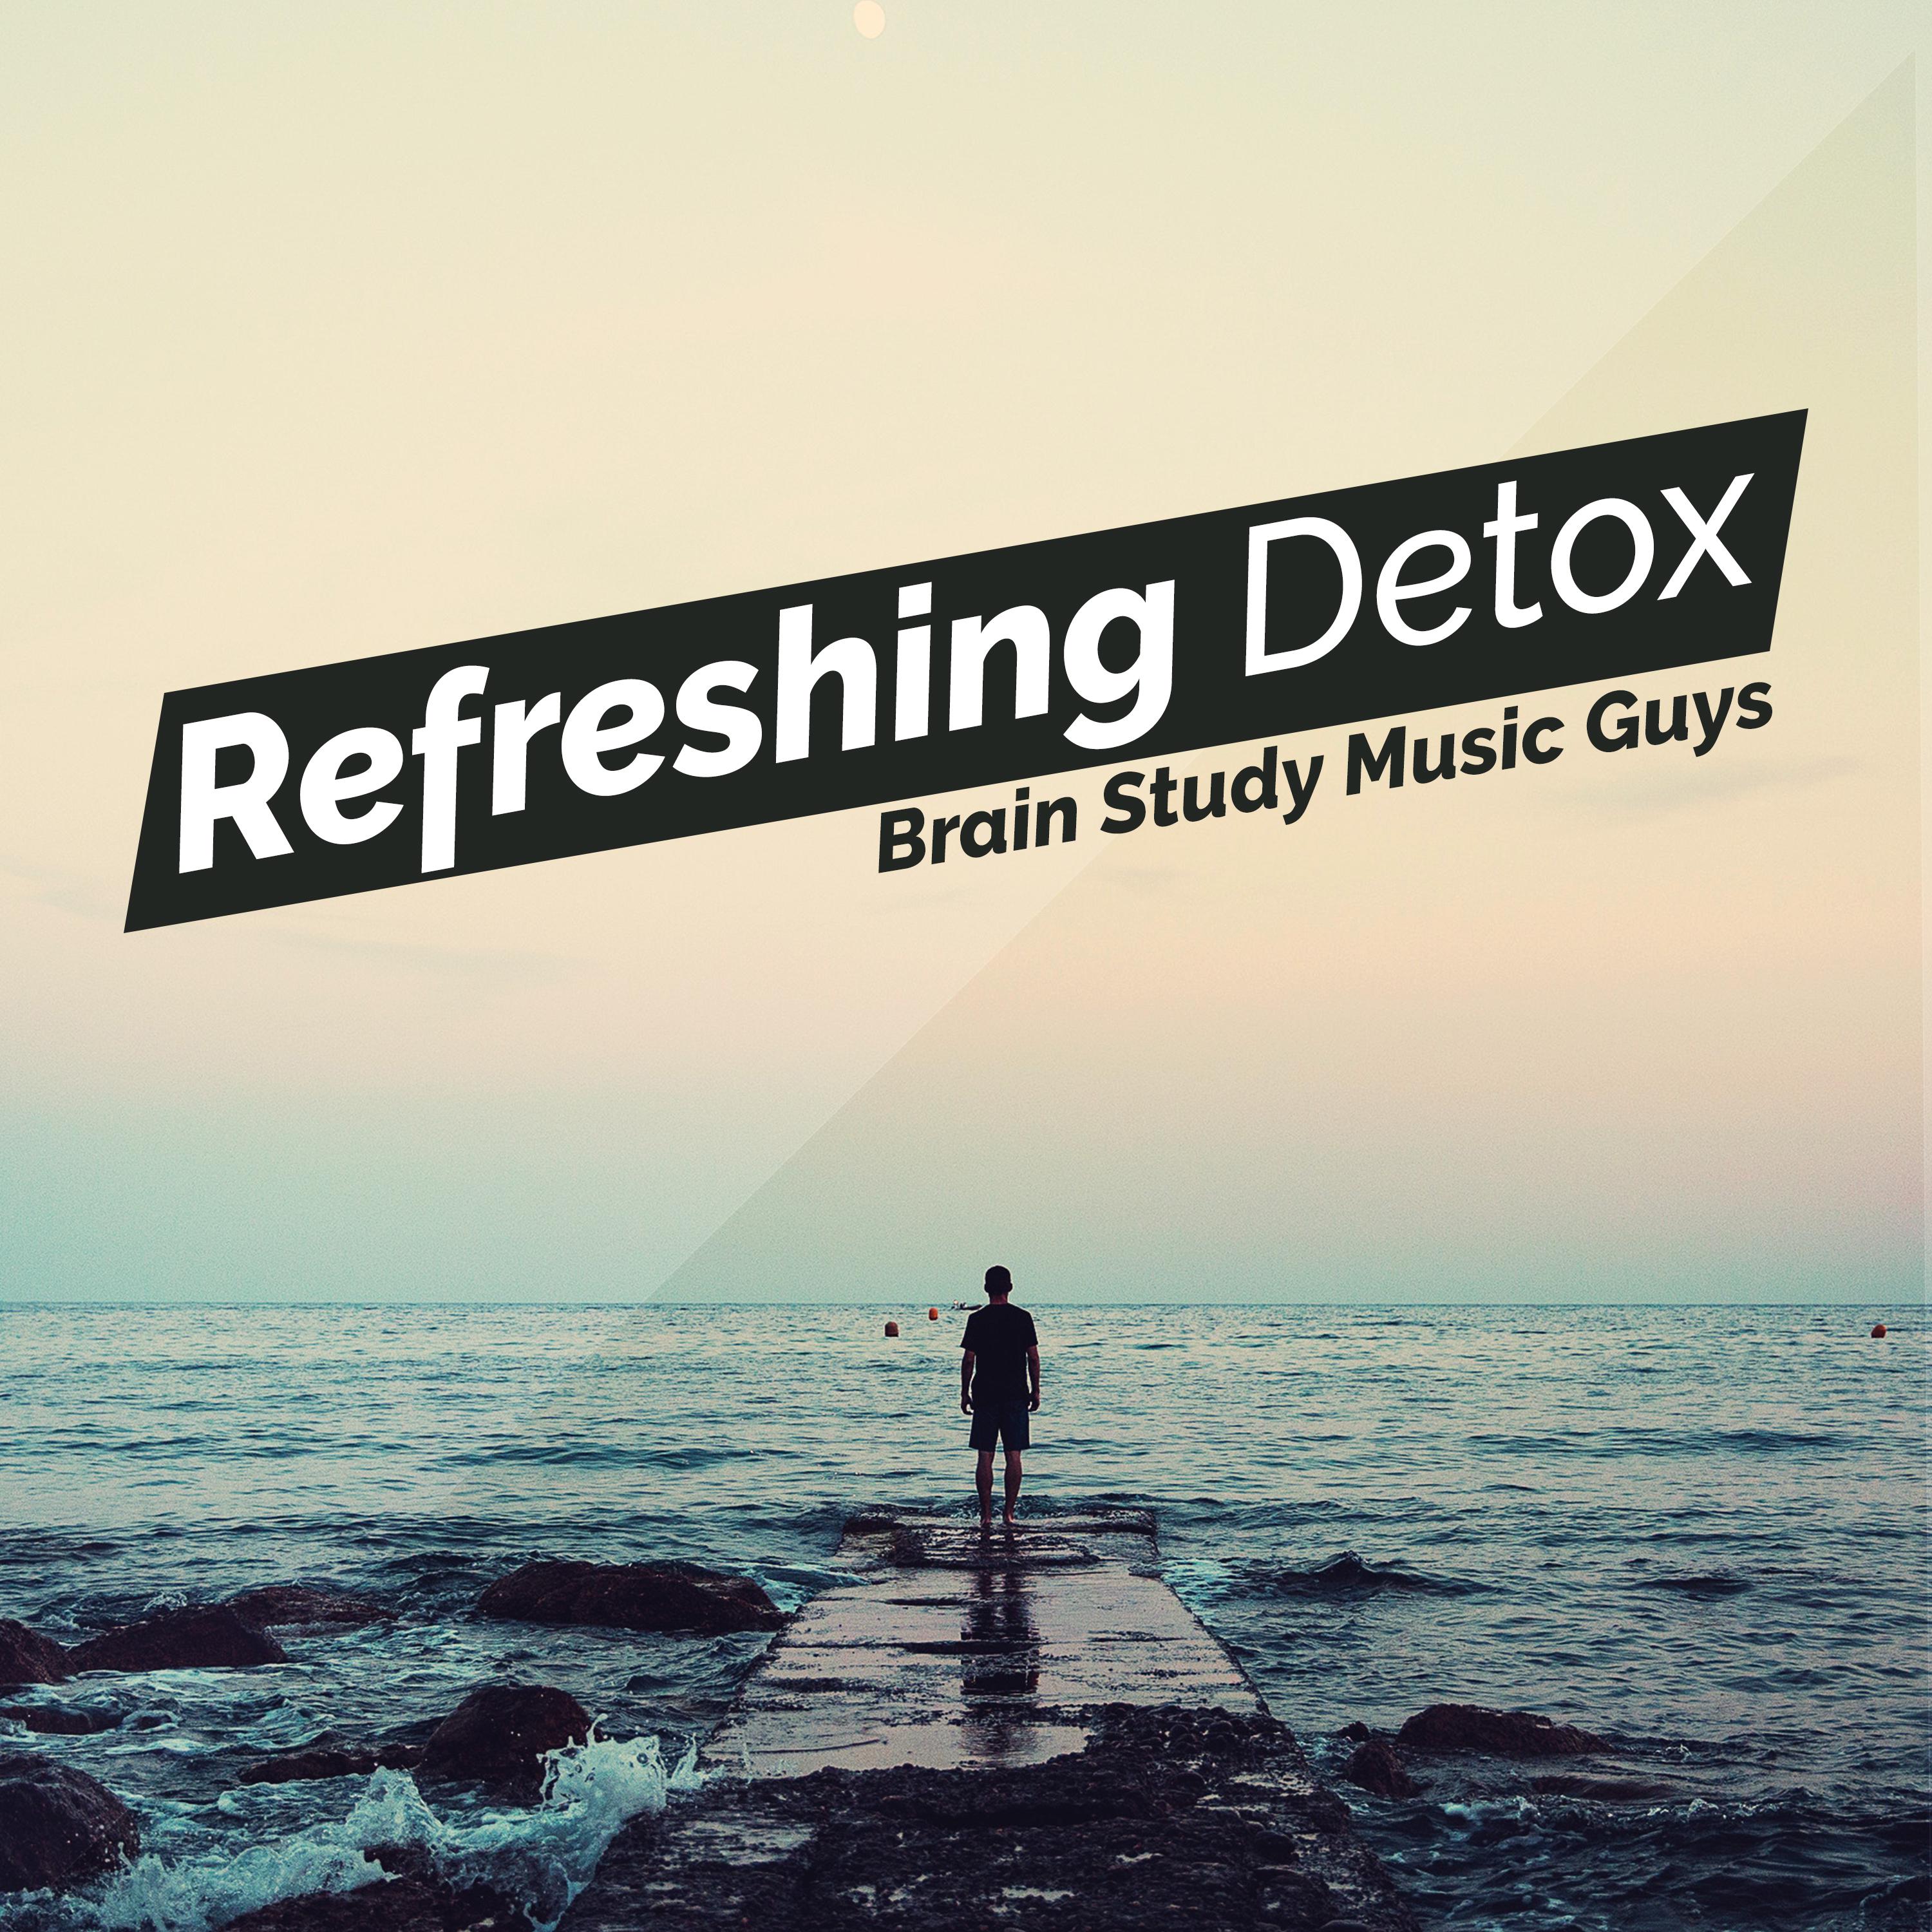 Refreshing Detox